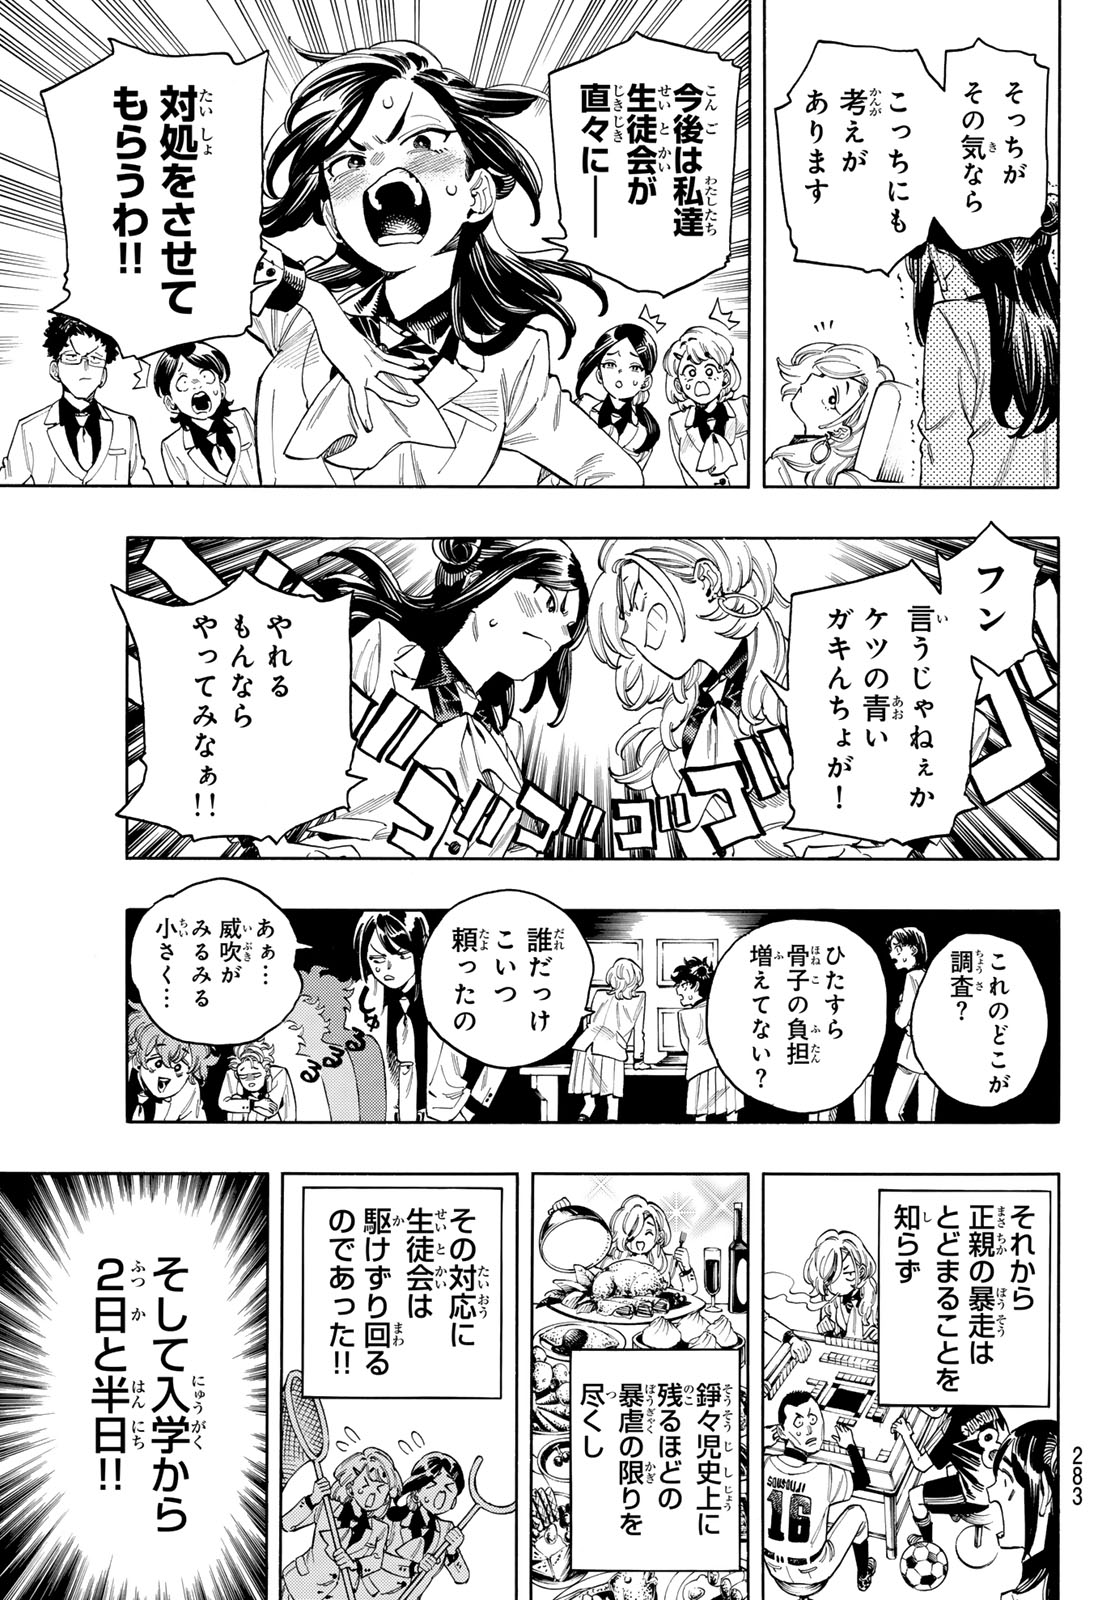 Akabane Honeko no Bodyguard - Chapter 77 - Page 7